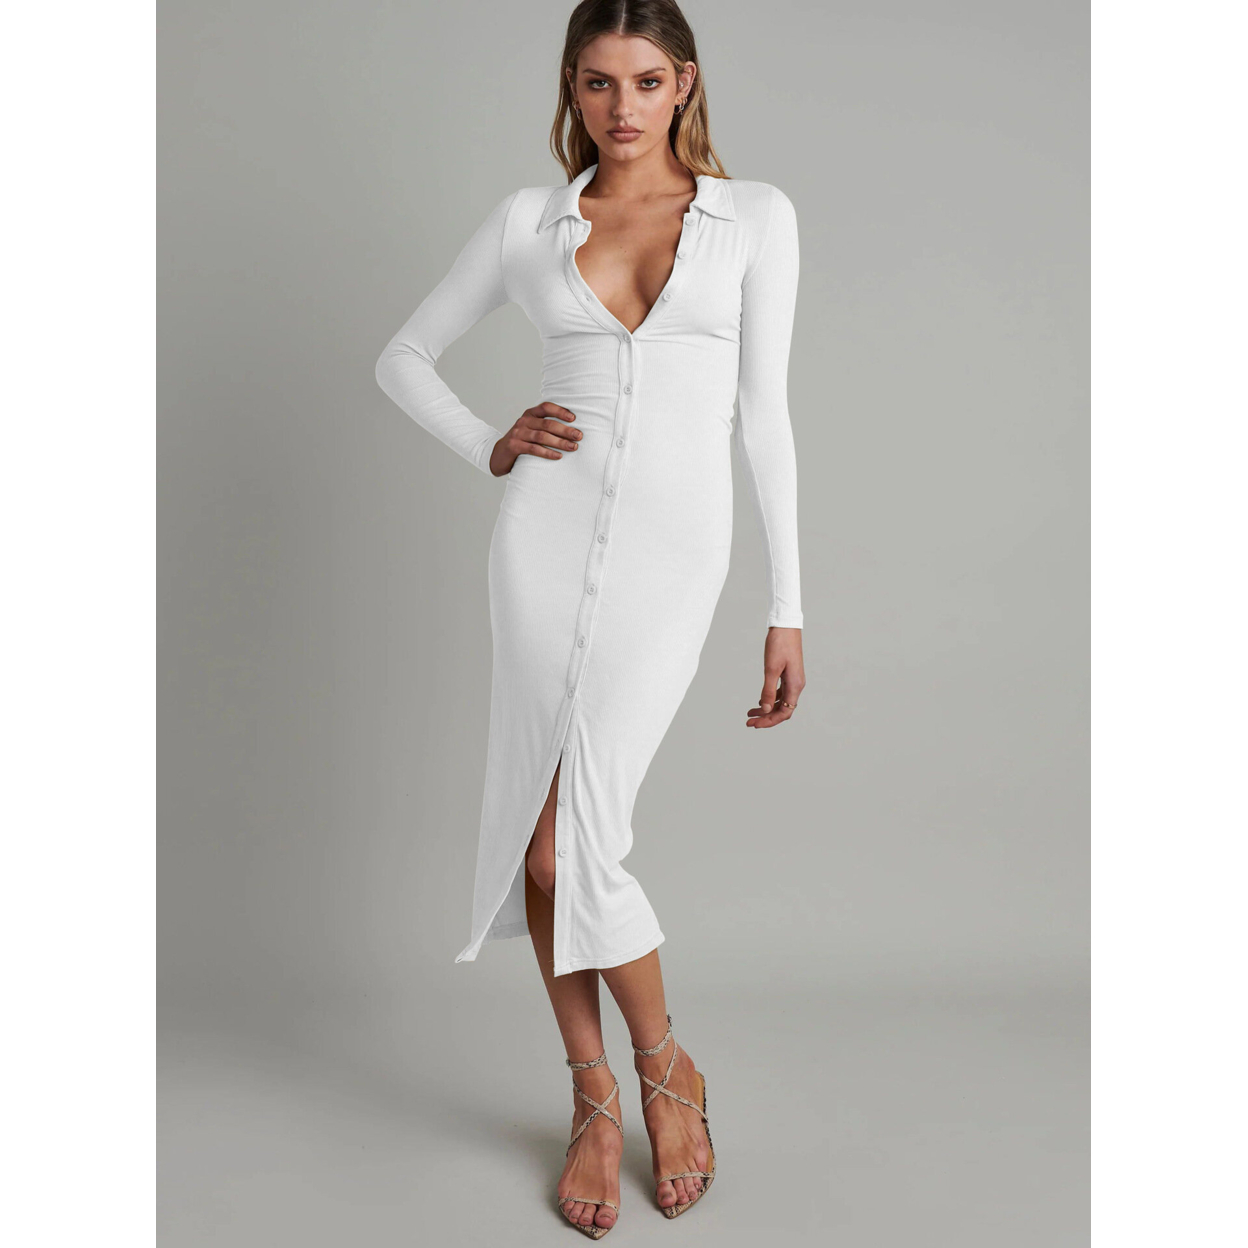 Sexy Fashion Cardigan Long Sleeve Shirt Skirt Women's Long Dress - White, Xl